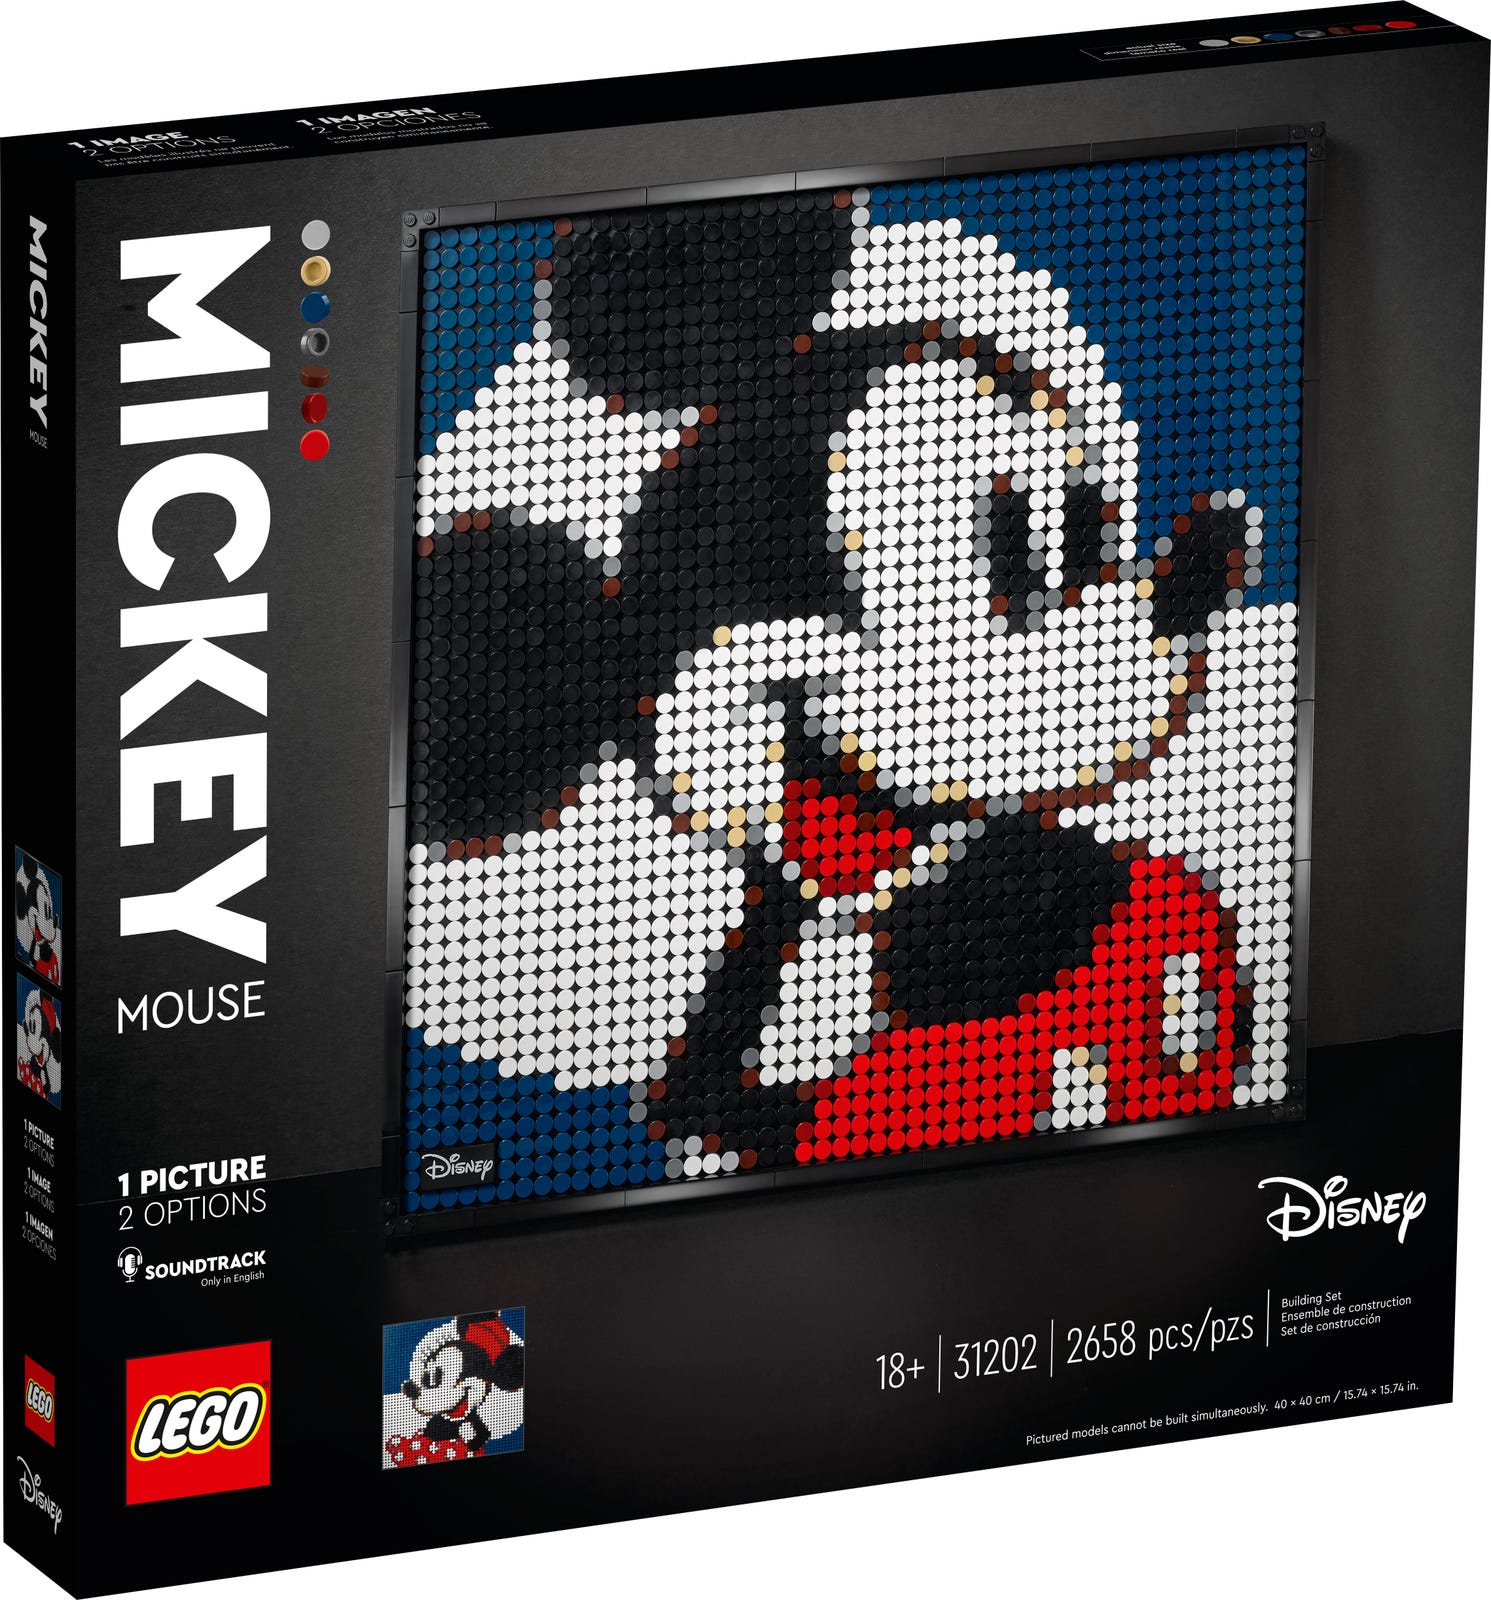 LEGO ART DISNEY'S MICKEY MOUSE 31202